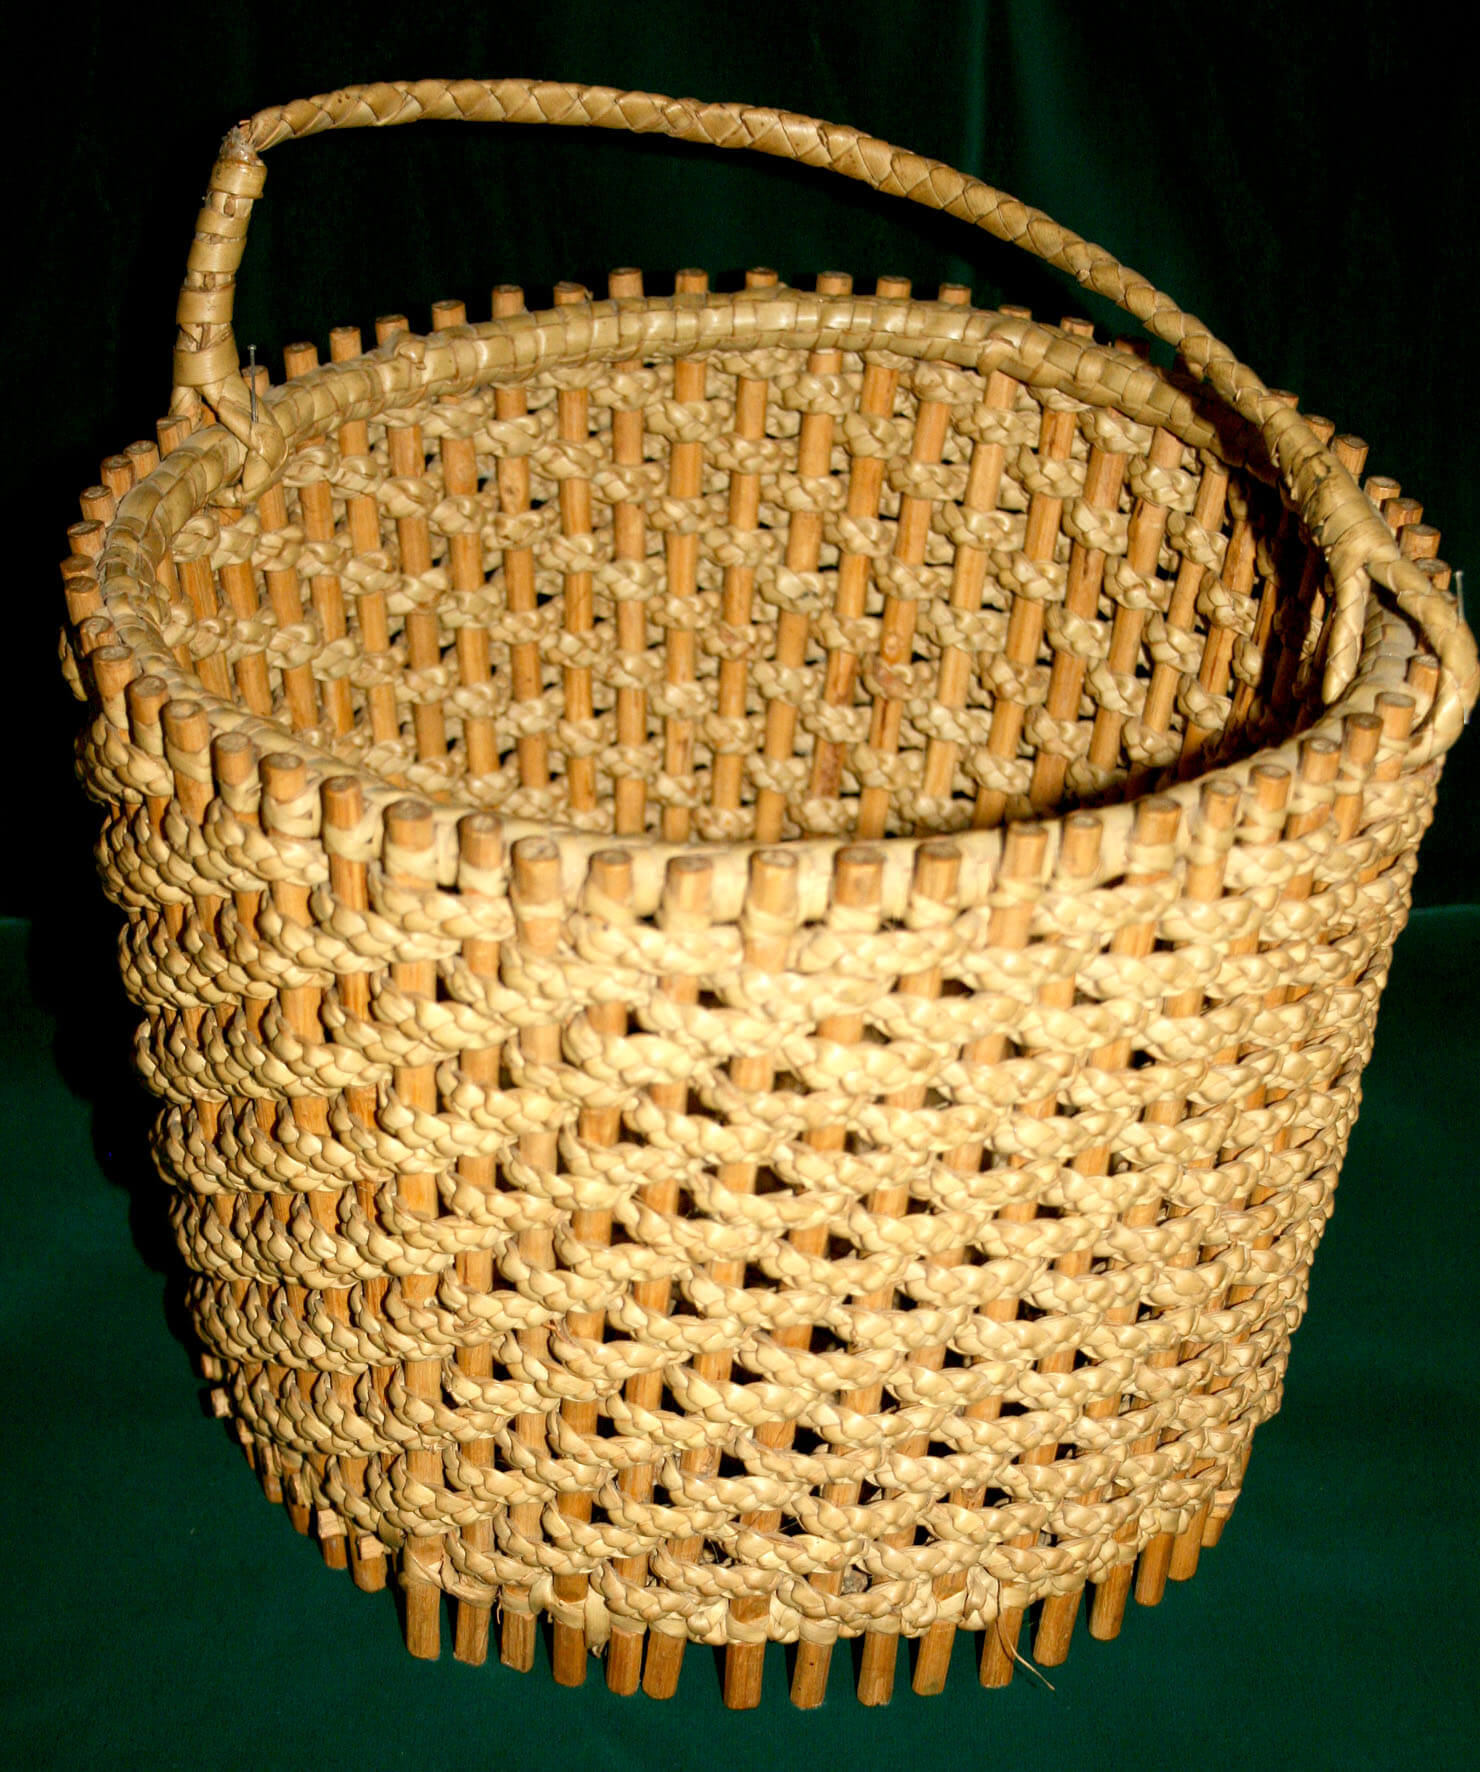 Fruit basket aawambo national museum